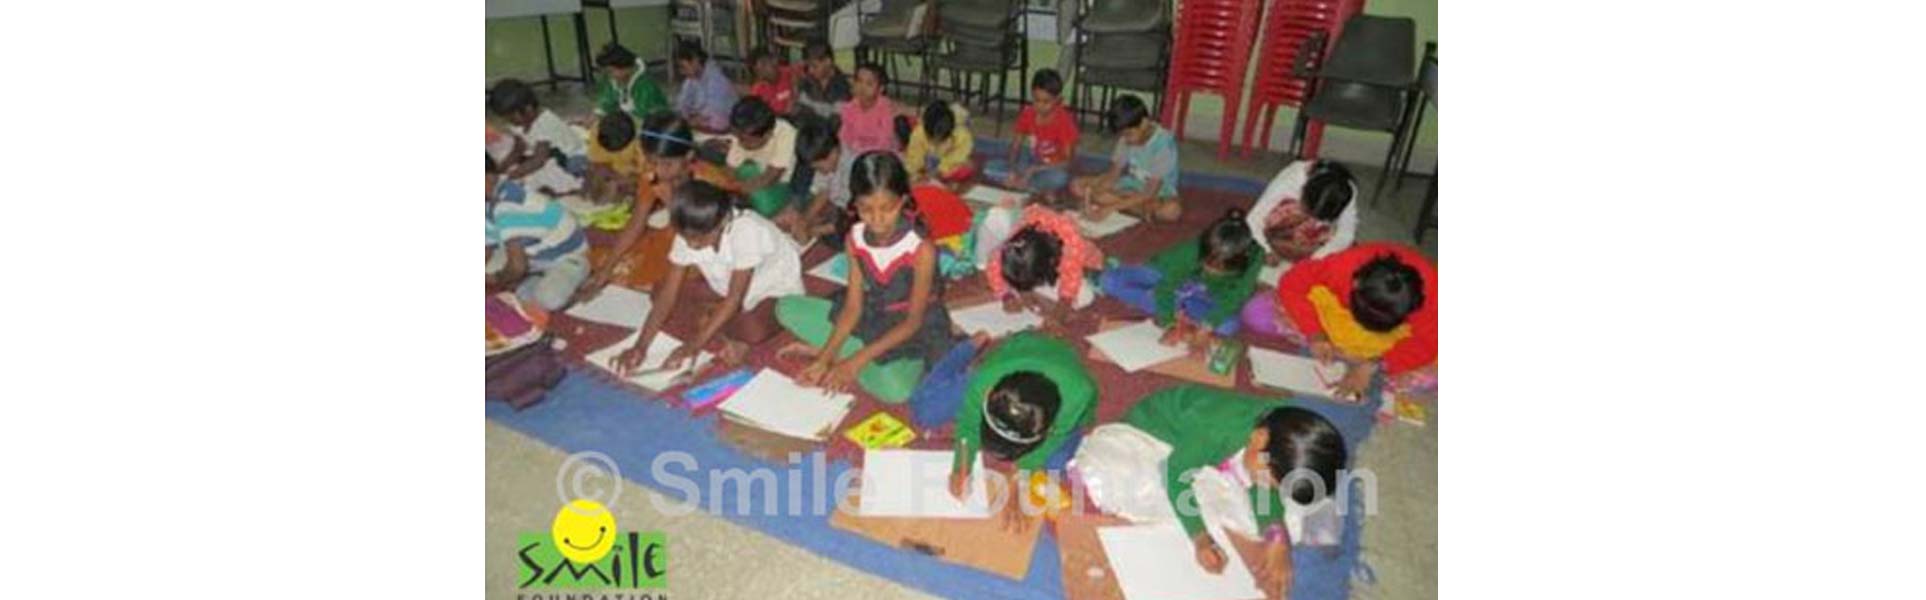 Special Art & Crafts session for Smile Kids